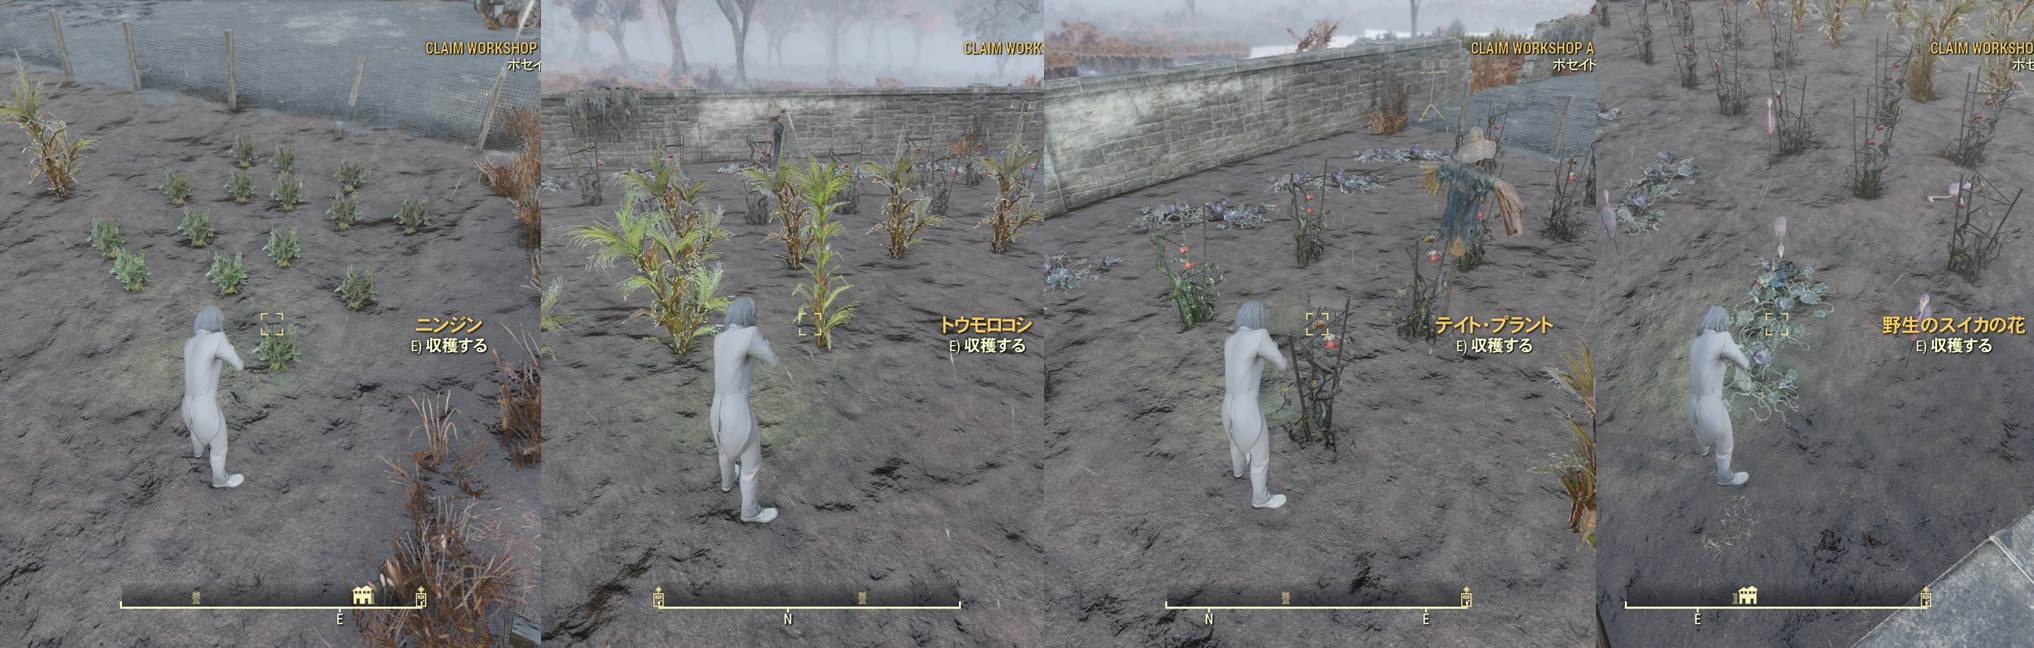 Fallout76 食料不足の解決方法 Game Hound